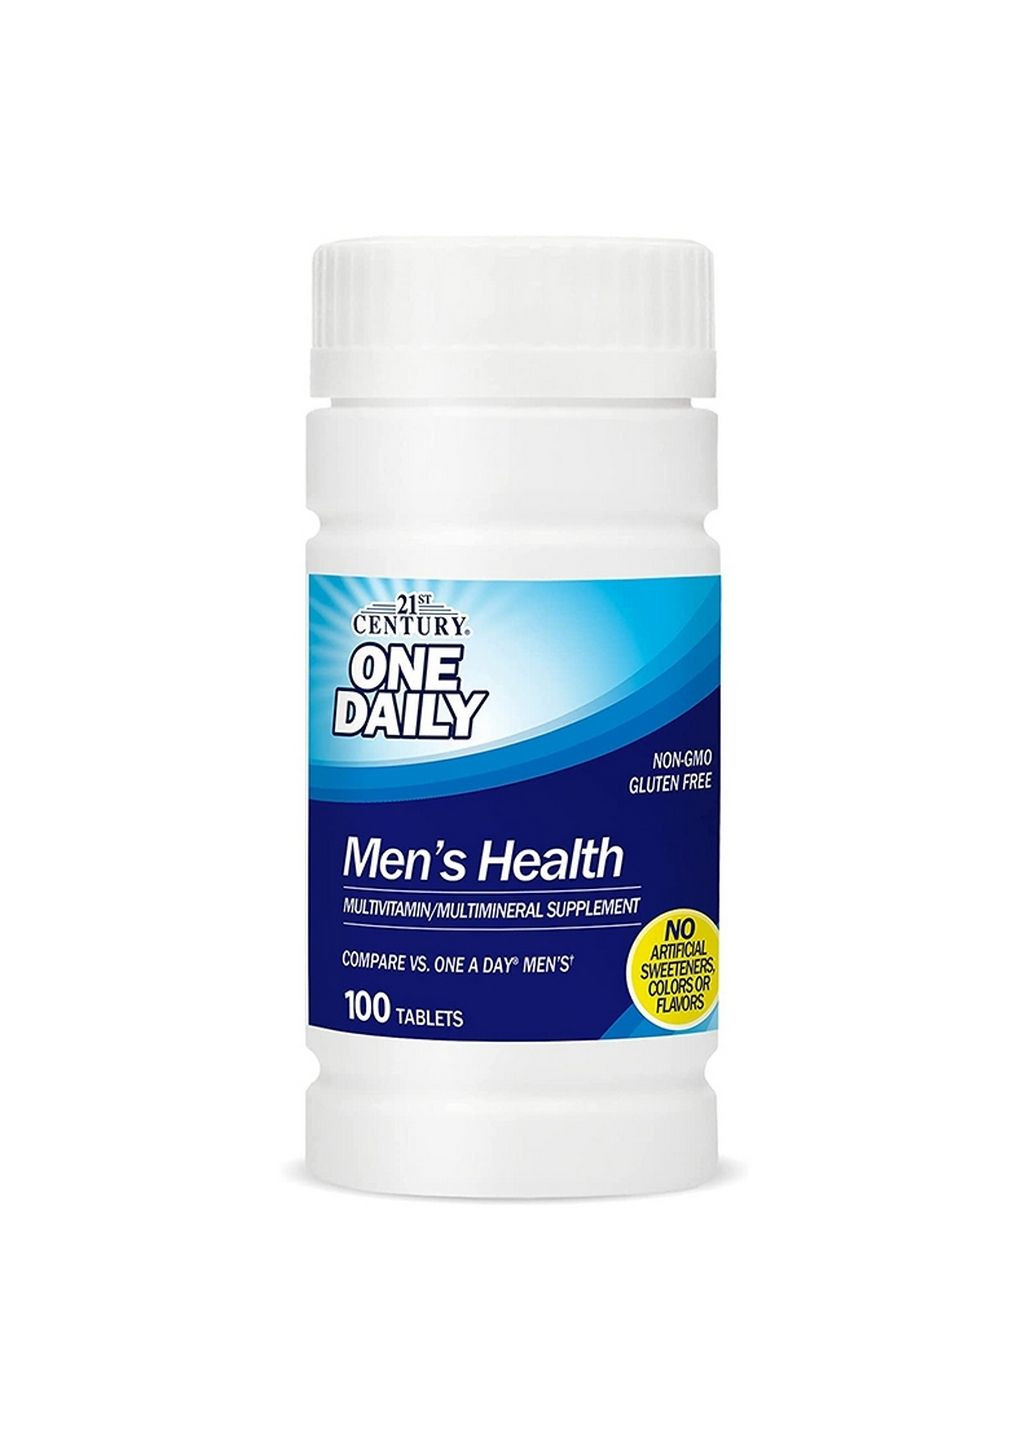 Витамины и минералы One Daily Men's Health, 100 таблеток 21st Century (293418980)